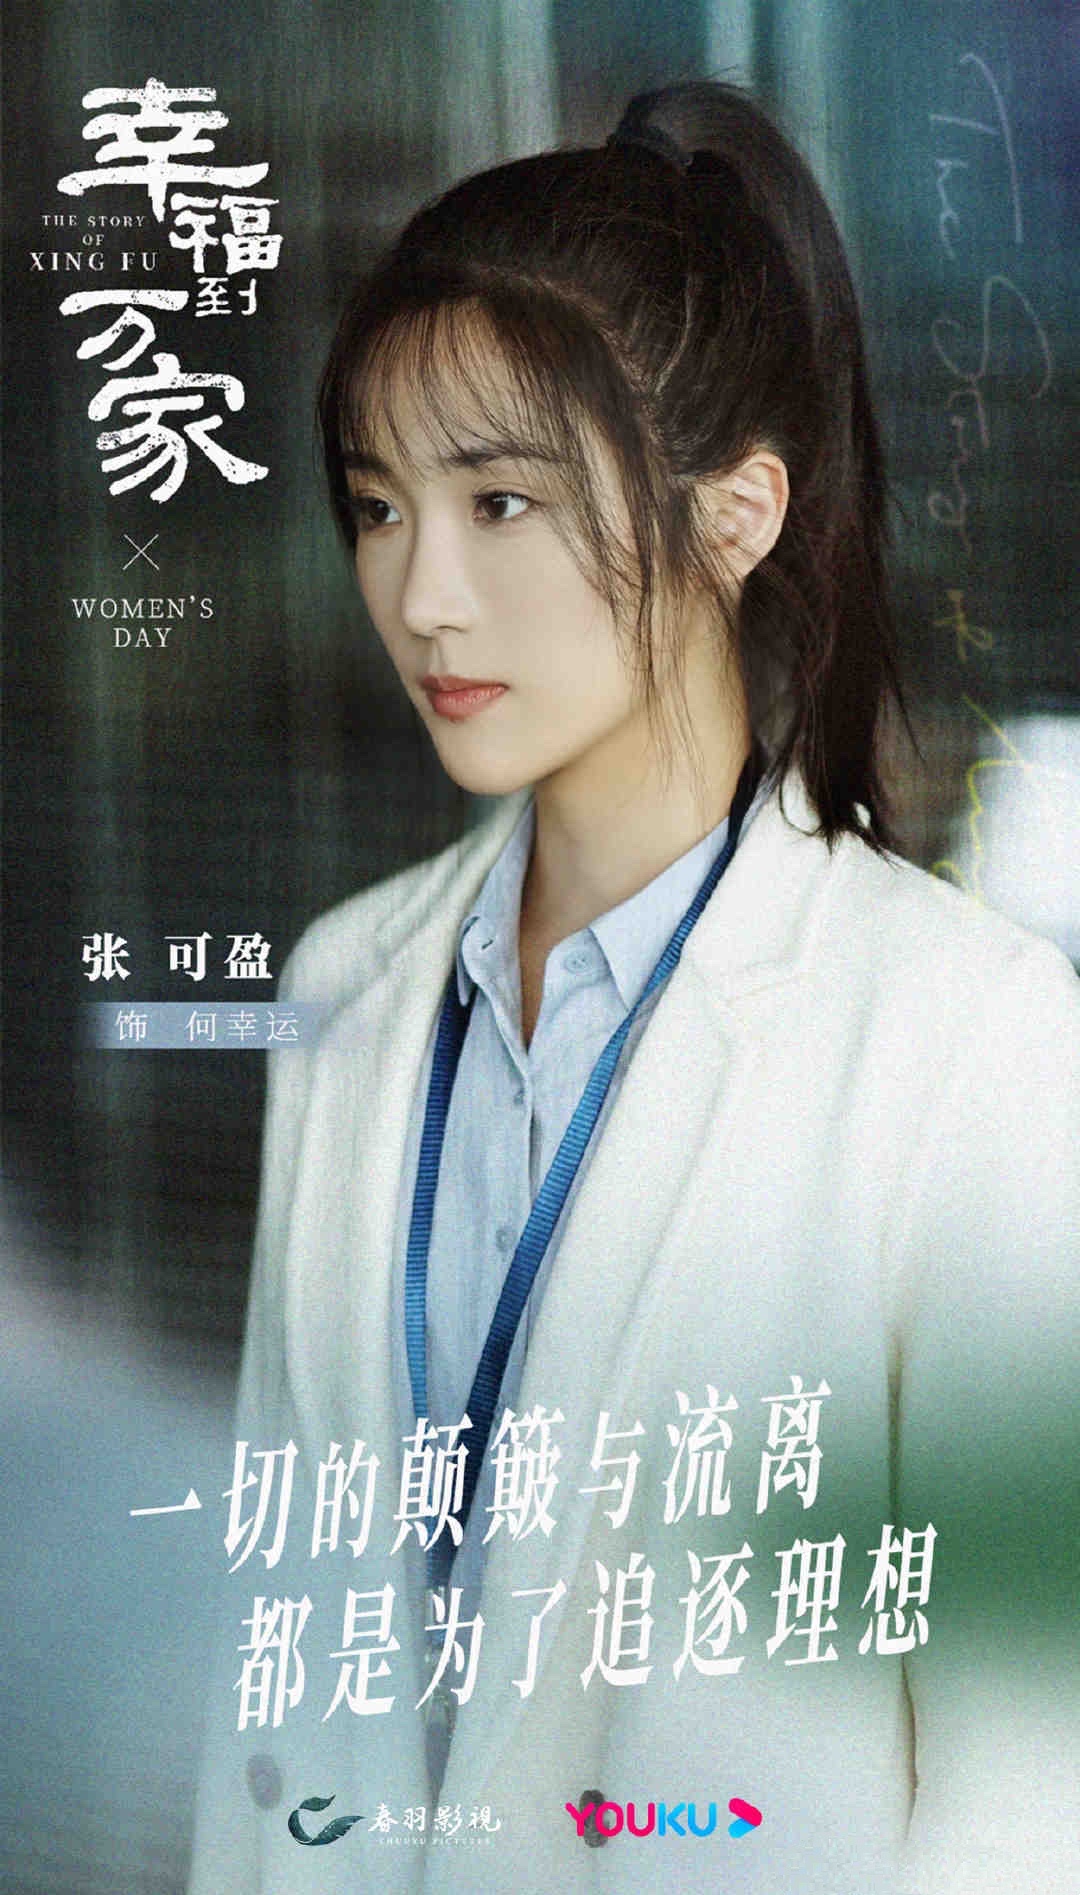 《幸福到万家》定档6.29 zhang ying 饰 zhao liying 妹妹演绎女性成长史引期待